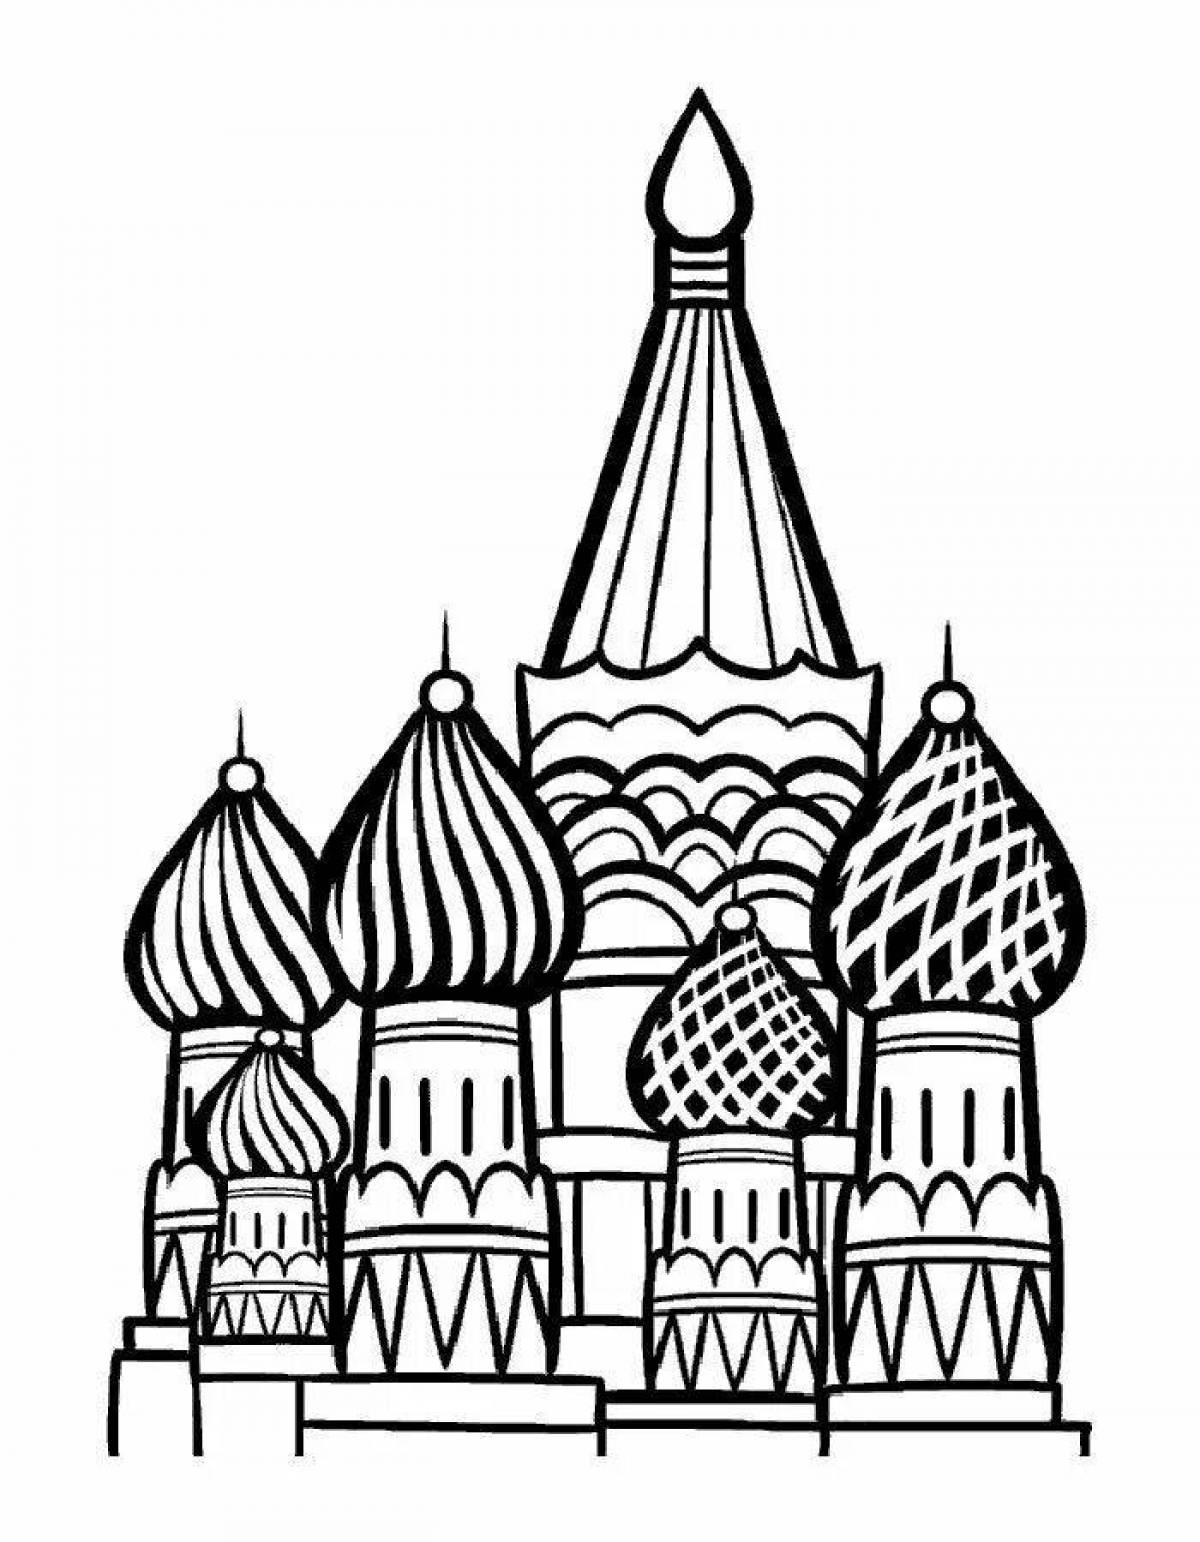 Moscow Kremlin #5